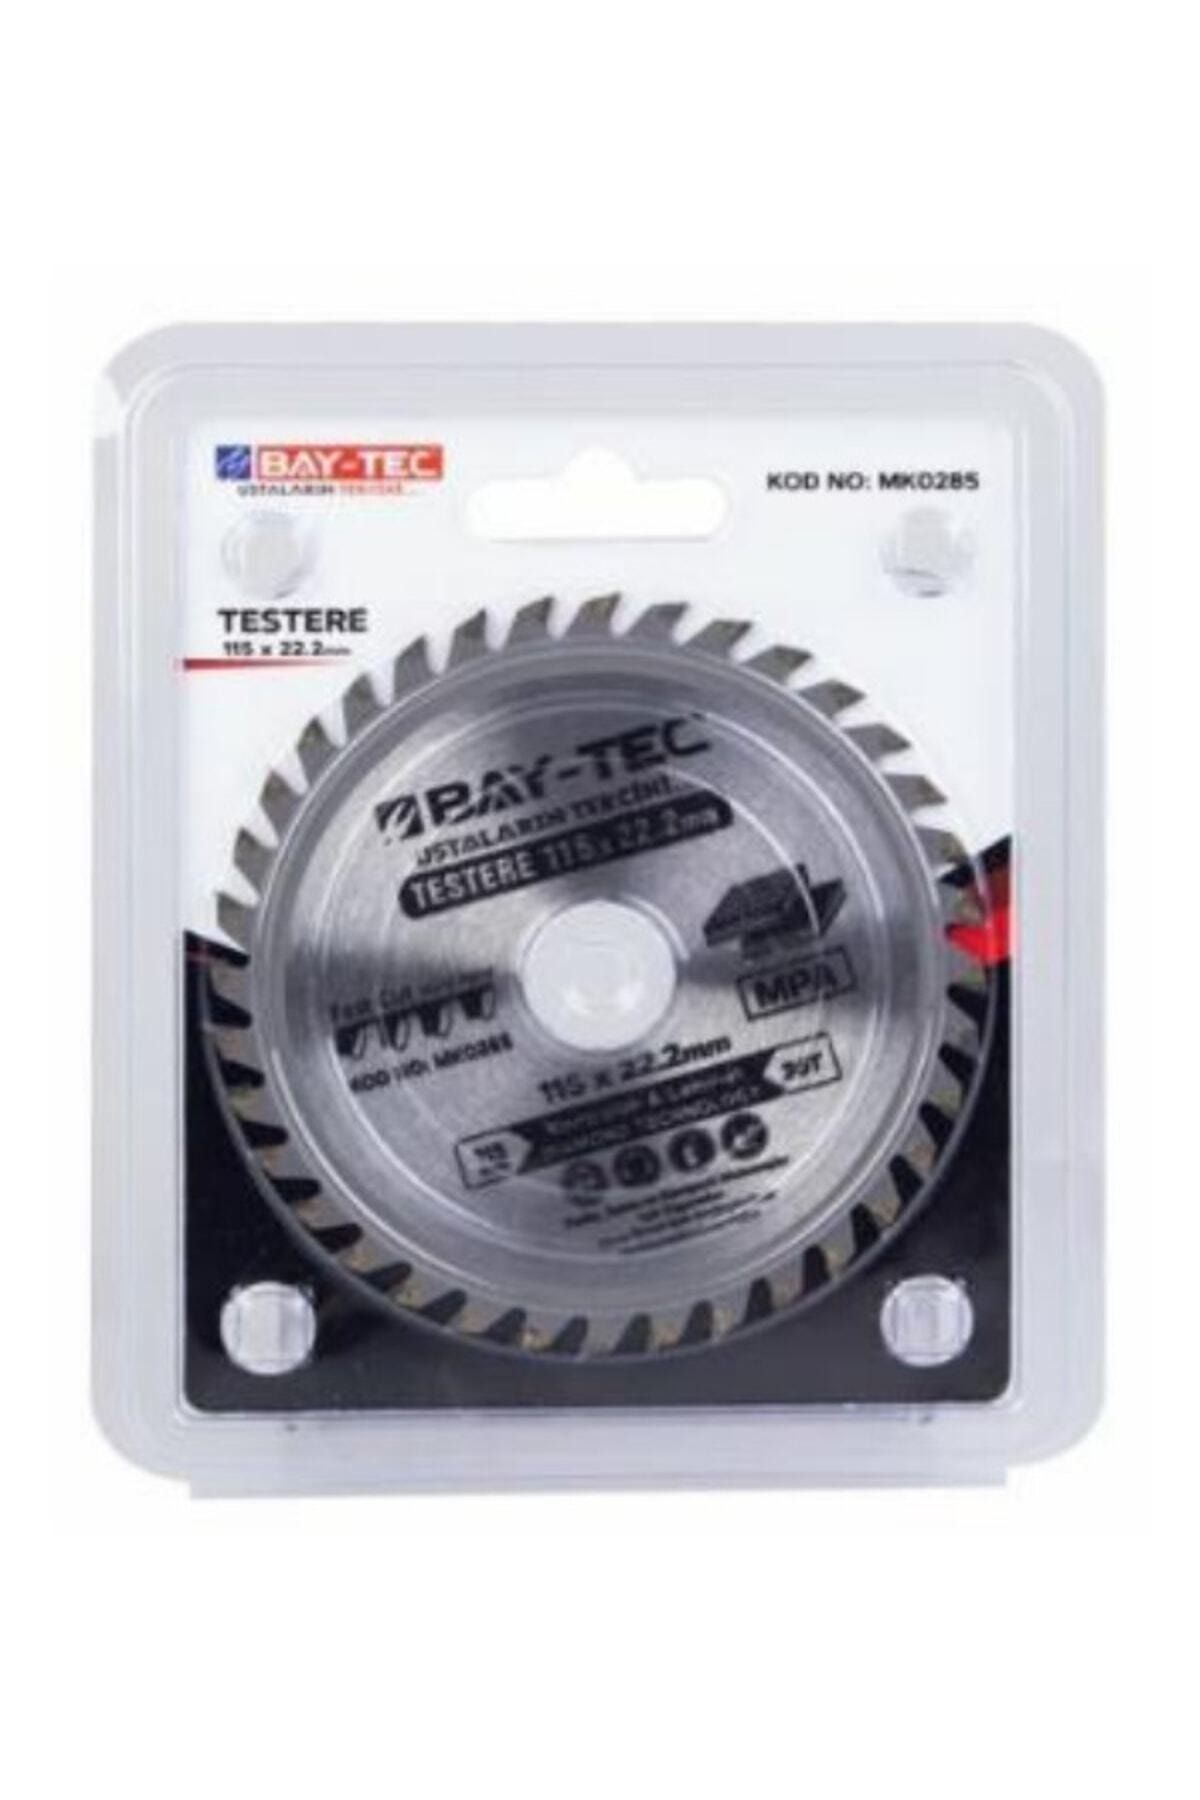 Baytec Bay-tec Testere Disk 115x22.2mm Mk0285 Parke Sunta Elmas Kesici